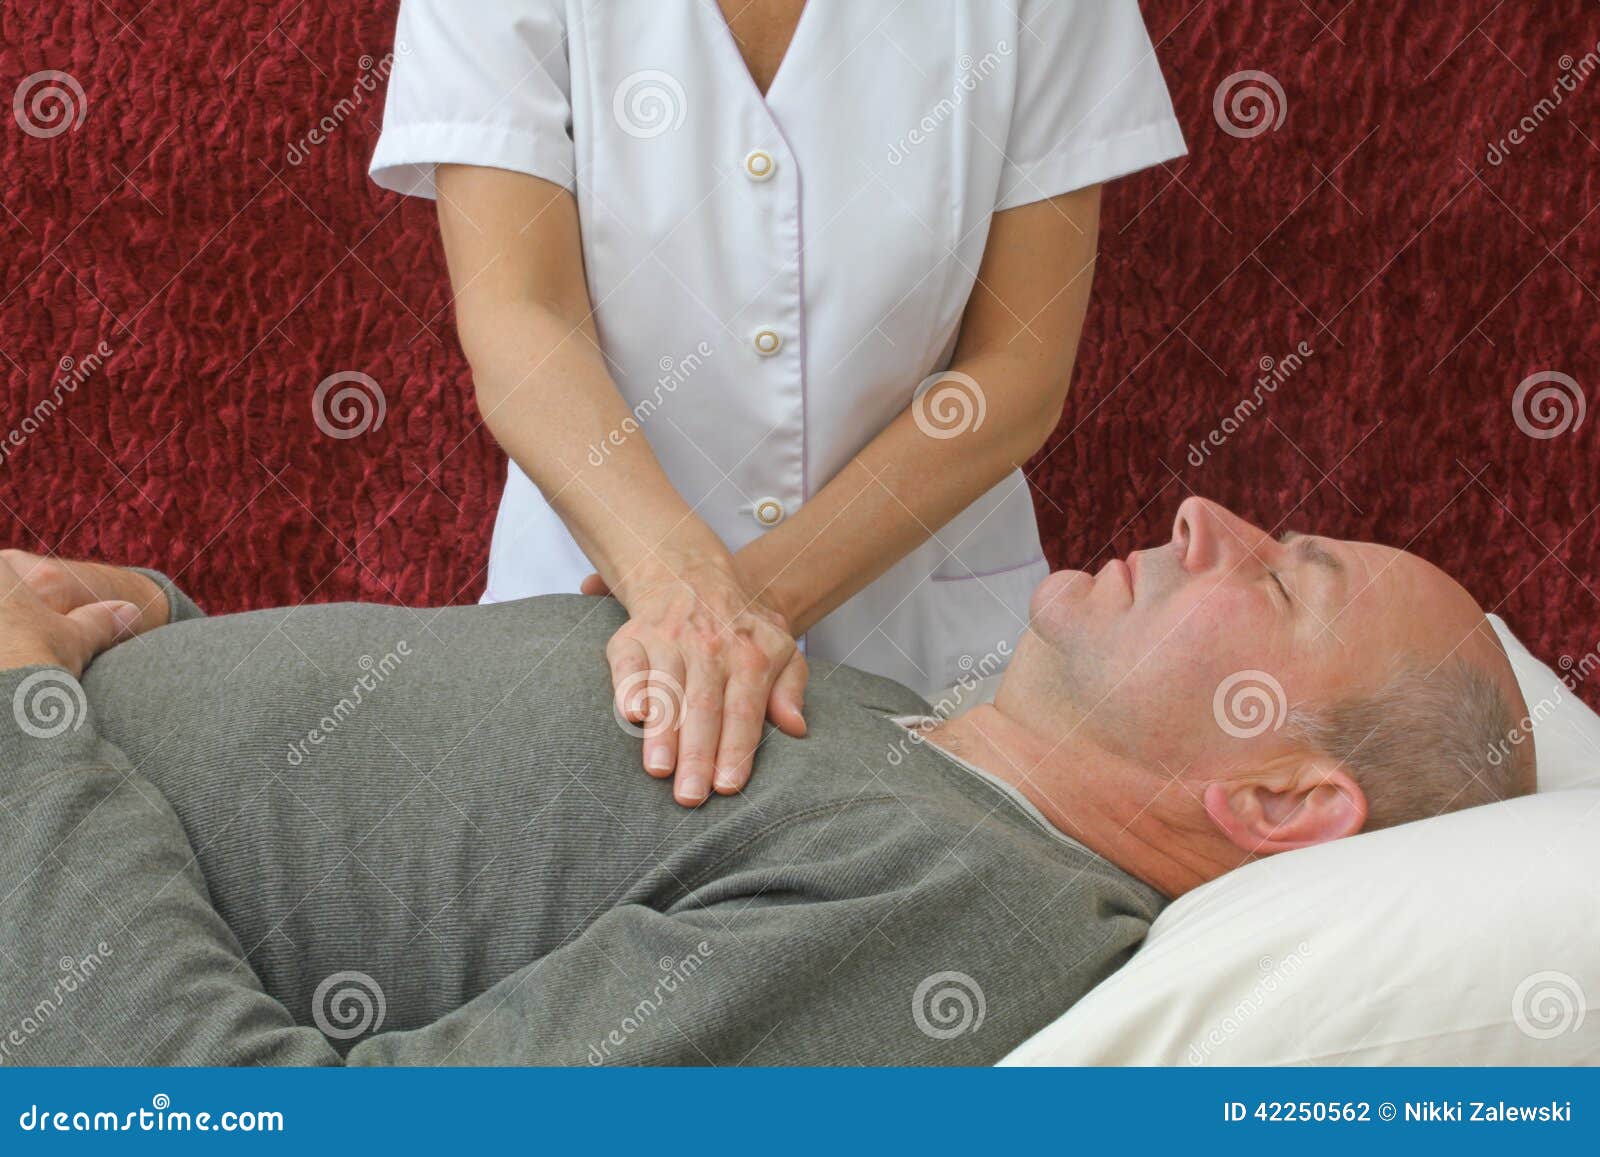 the relaxing effects of reiki healing